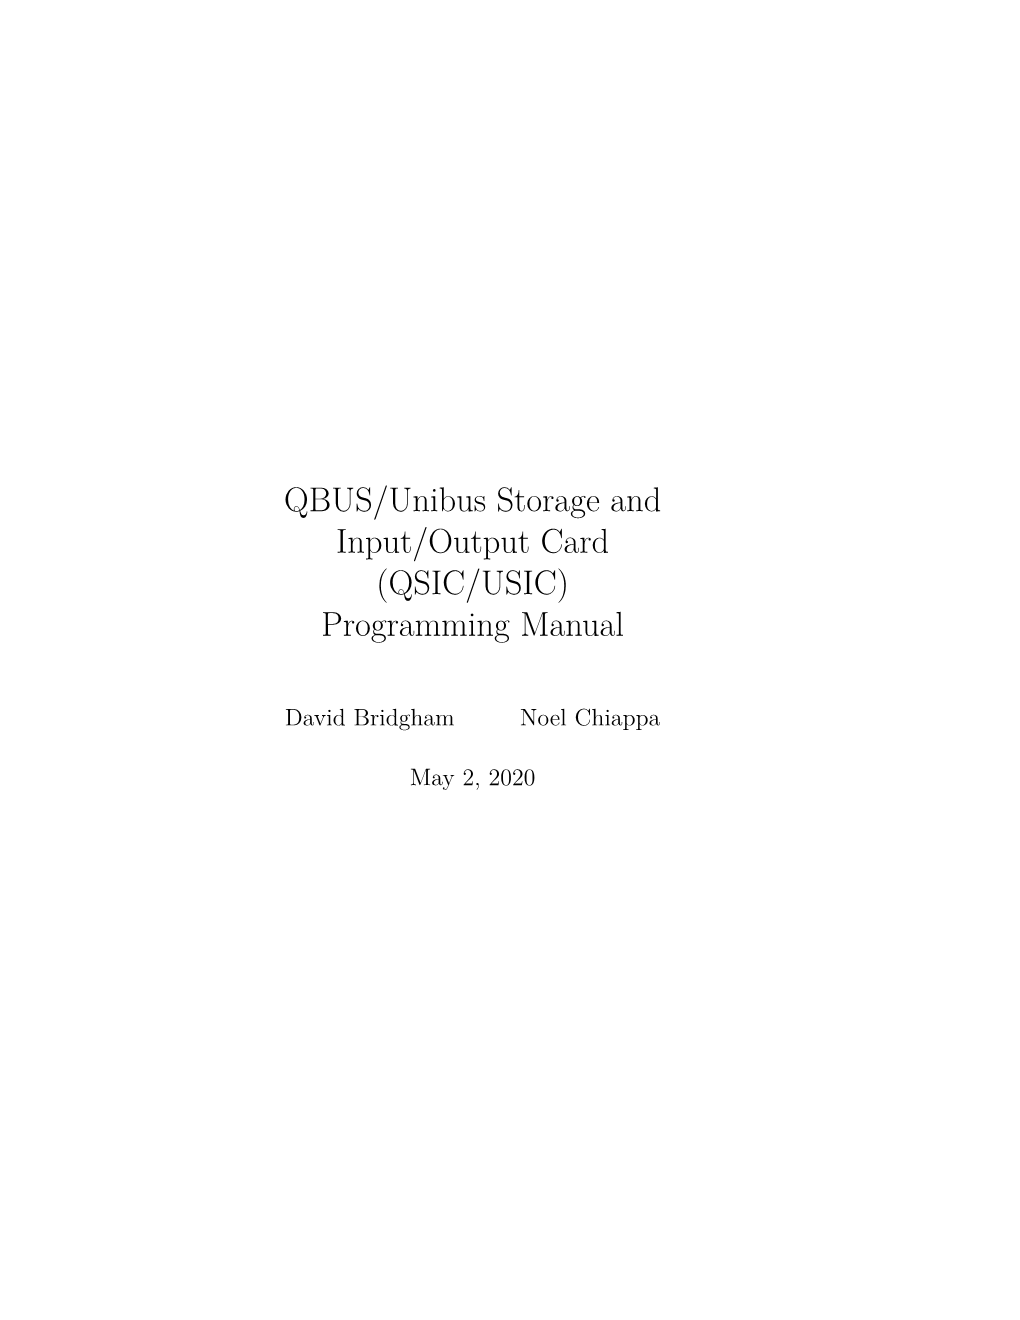 QBUS/Unibus Storage and Input/Output Card (QSIC/USIC) Programming Manual